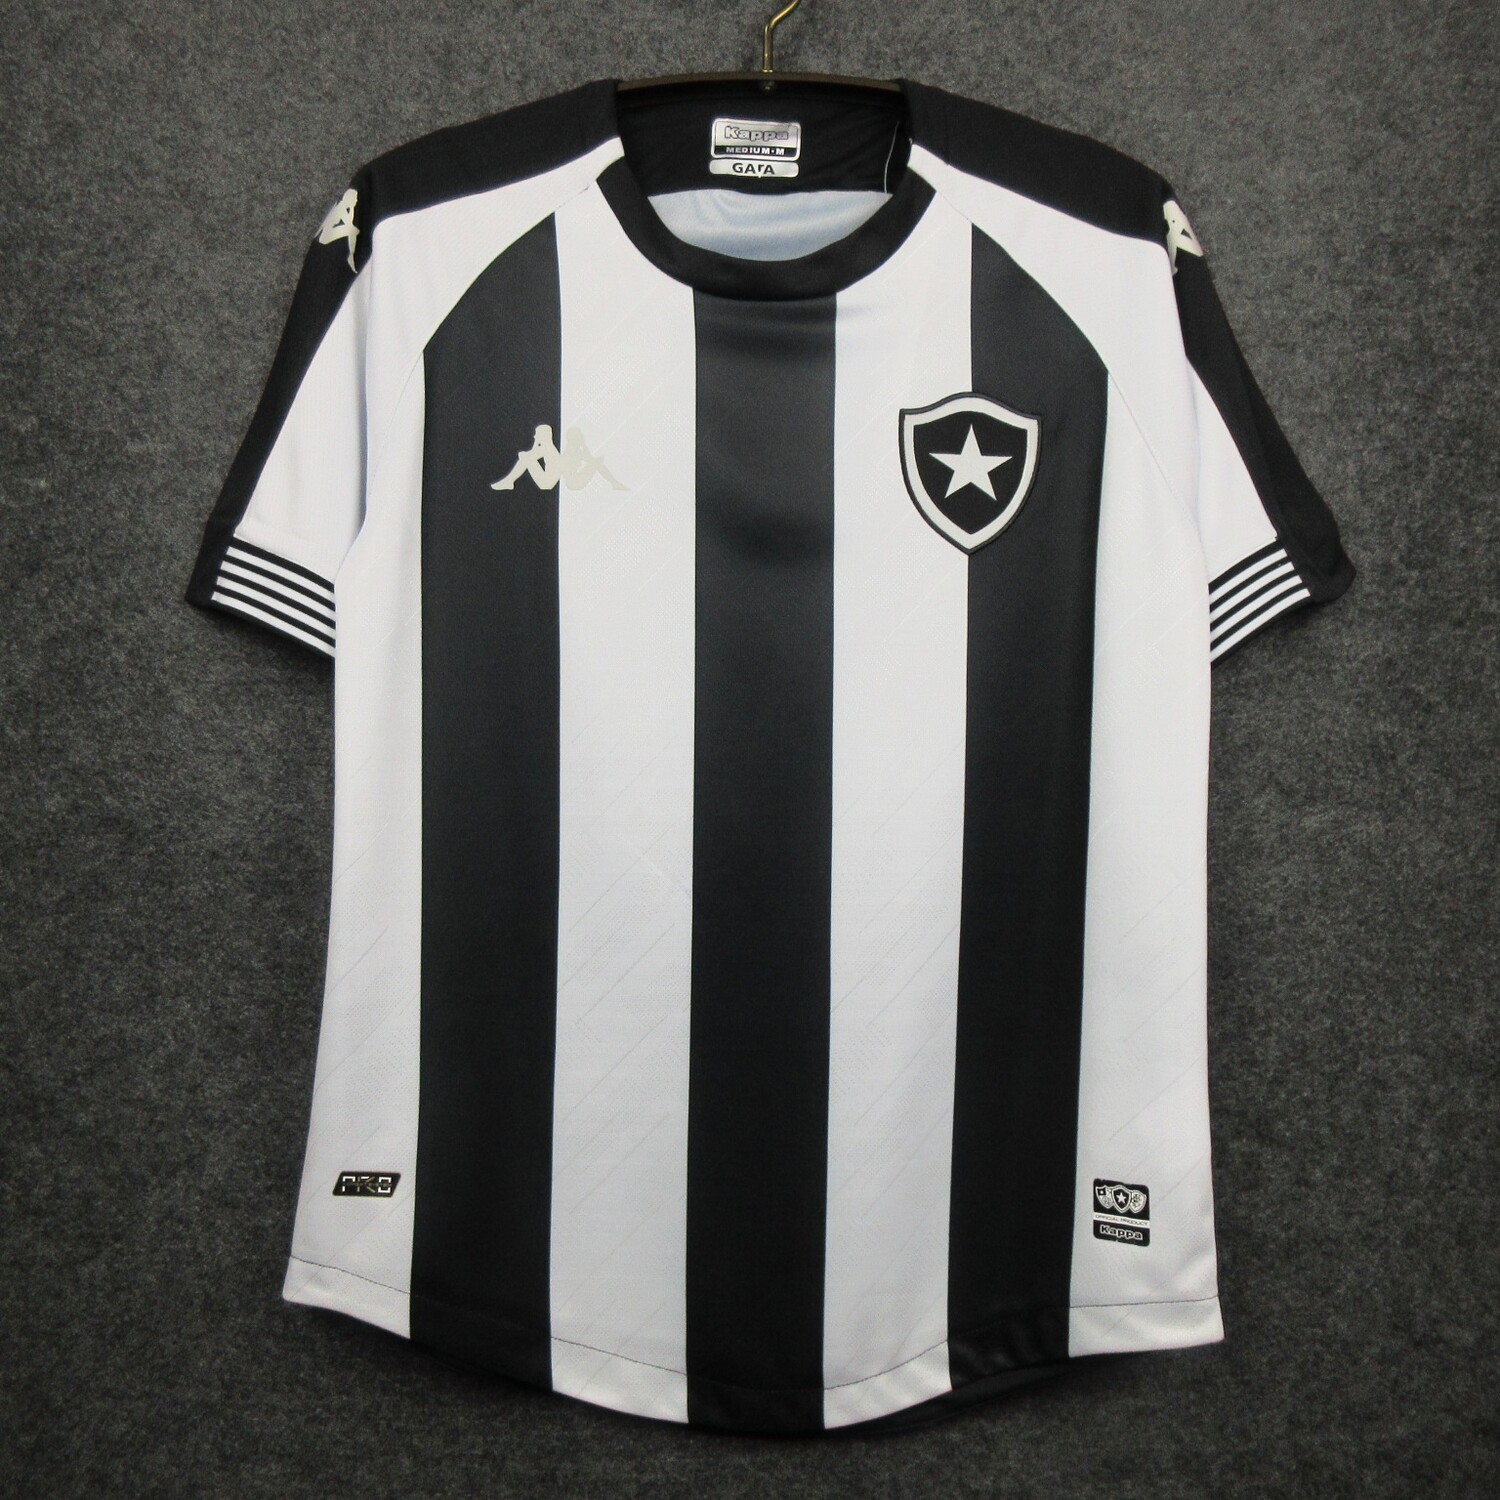 Camisa Botafogo I 20/21 Torcedor Kappa Masculina - Preto e Branco